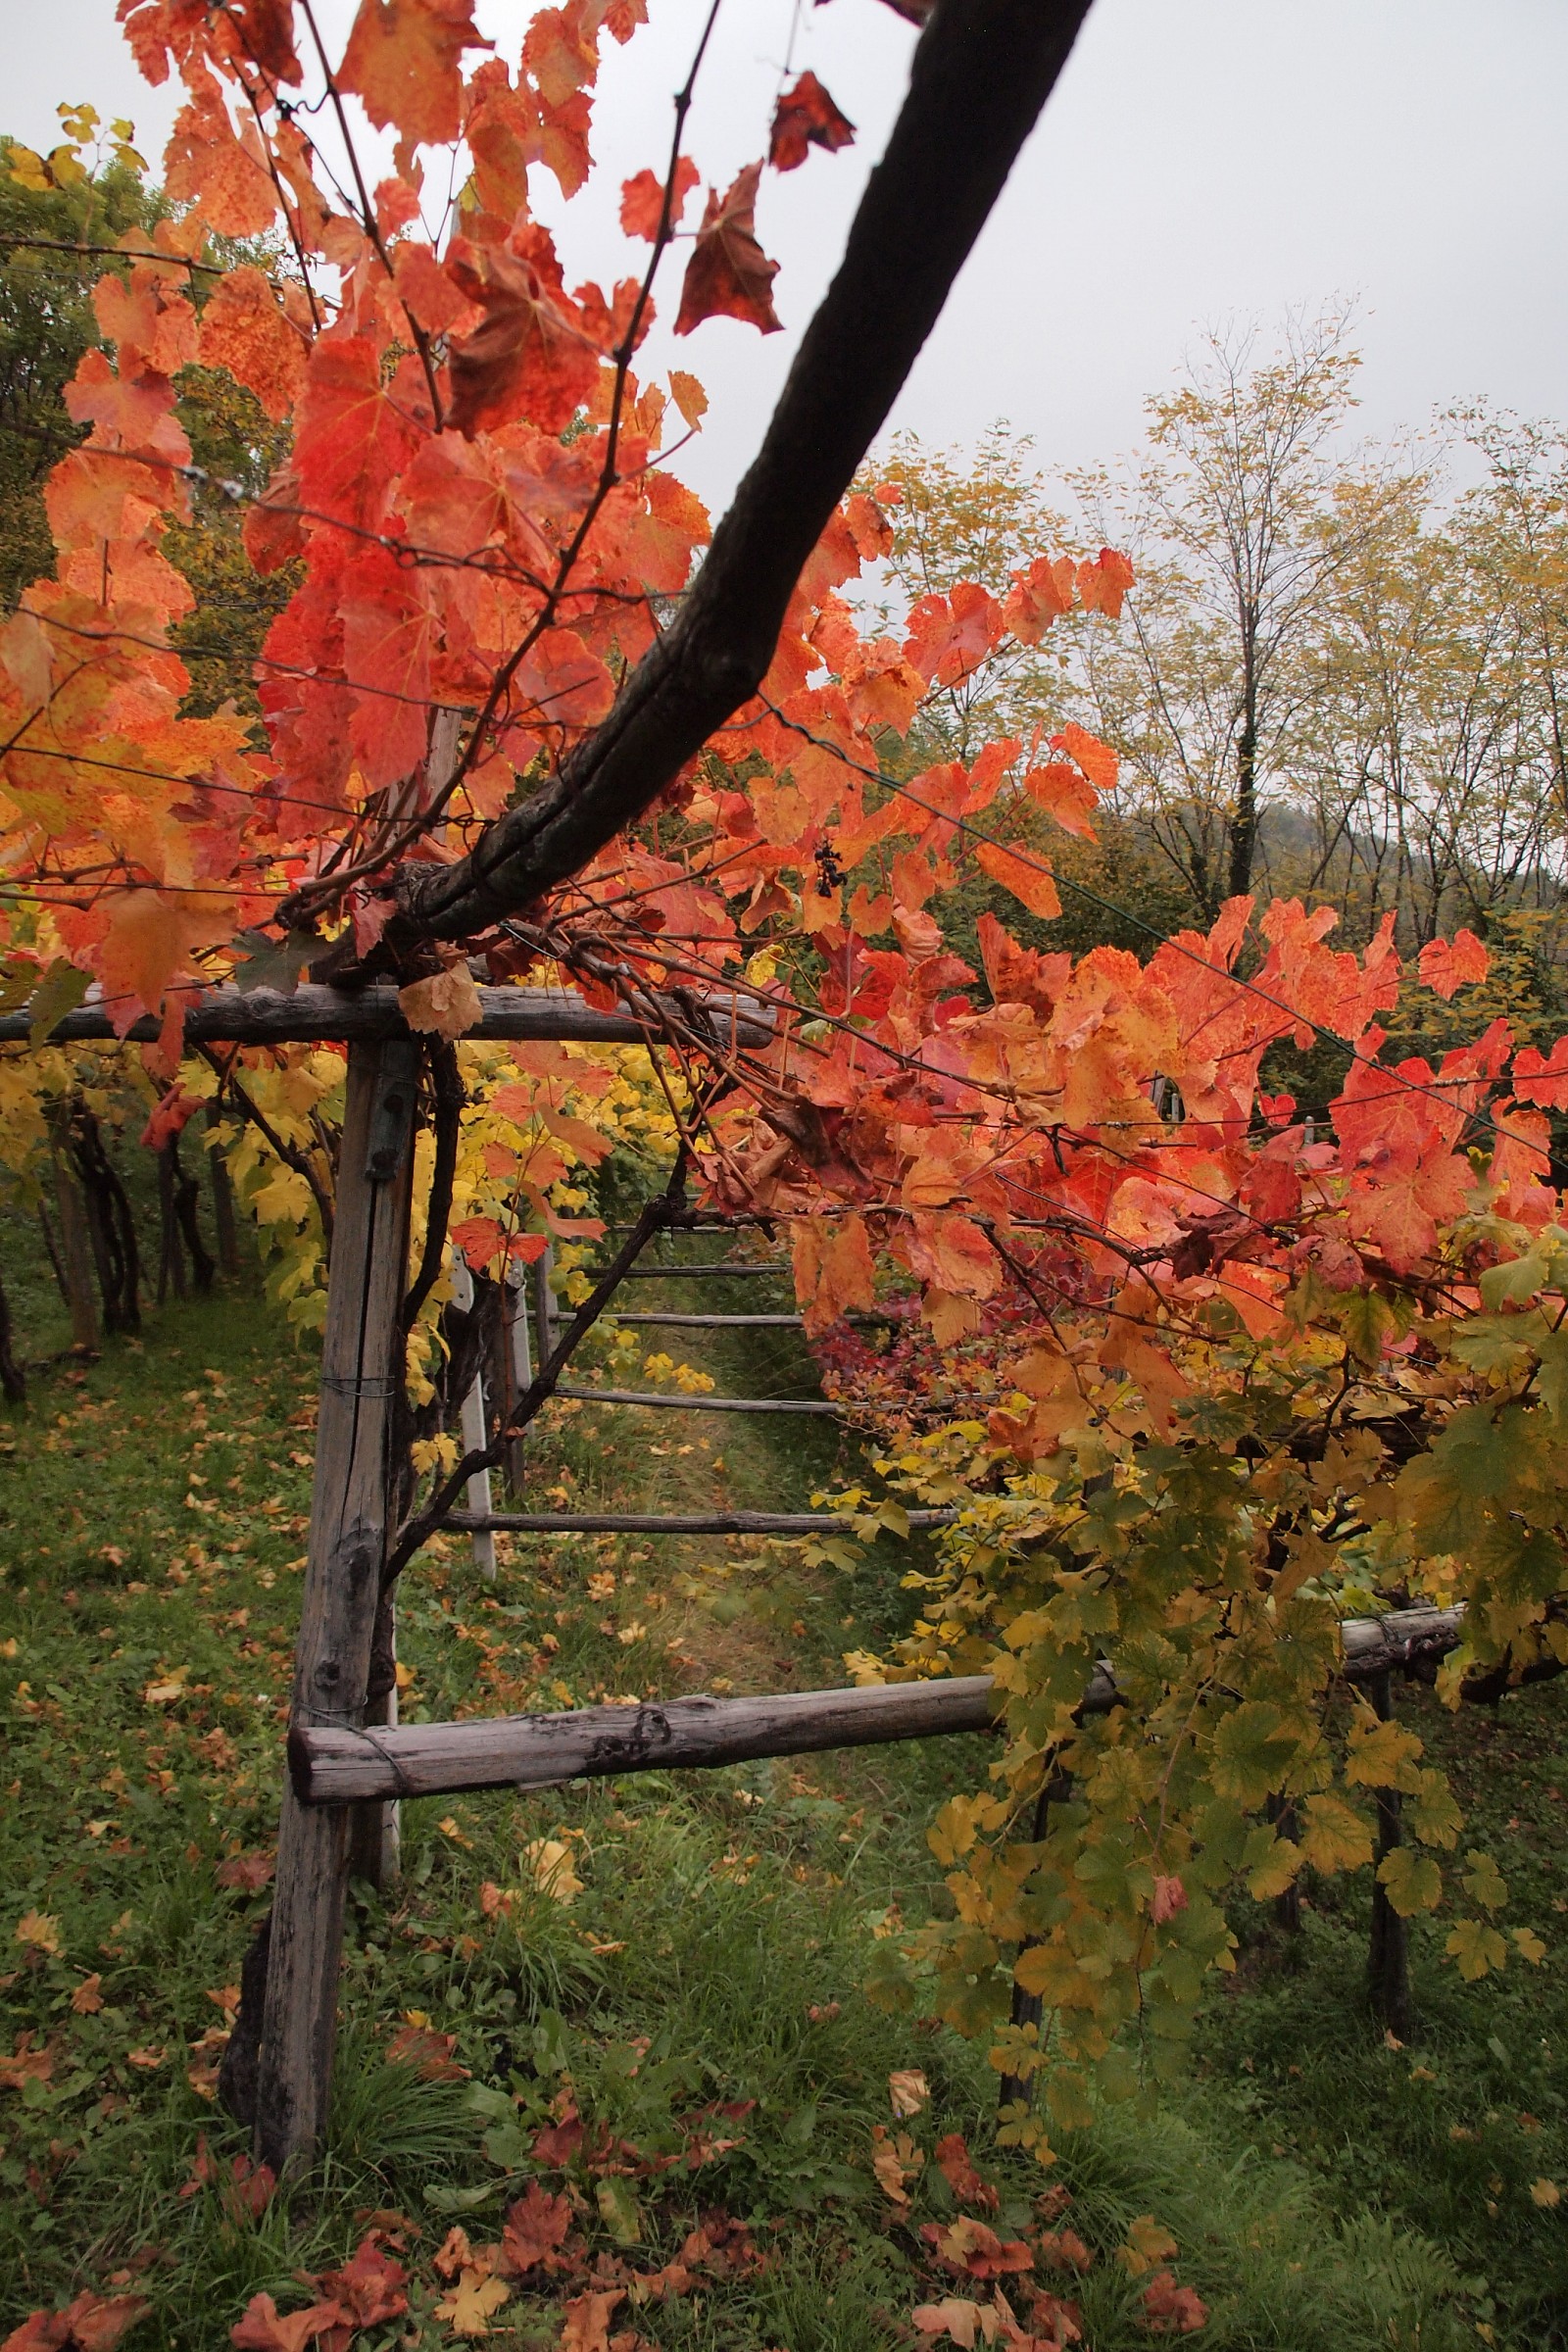 Autumn in the vineyards...